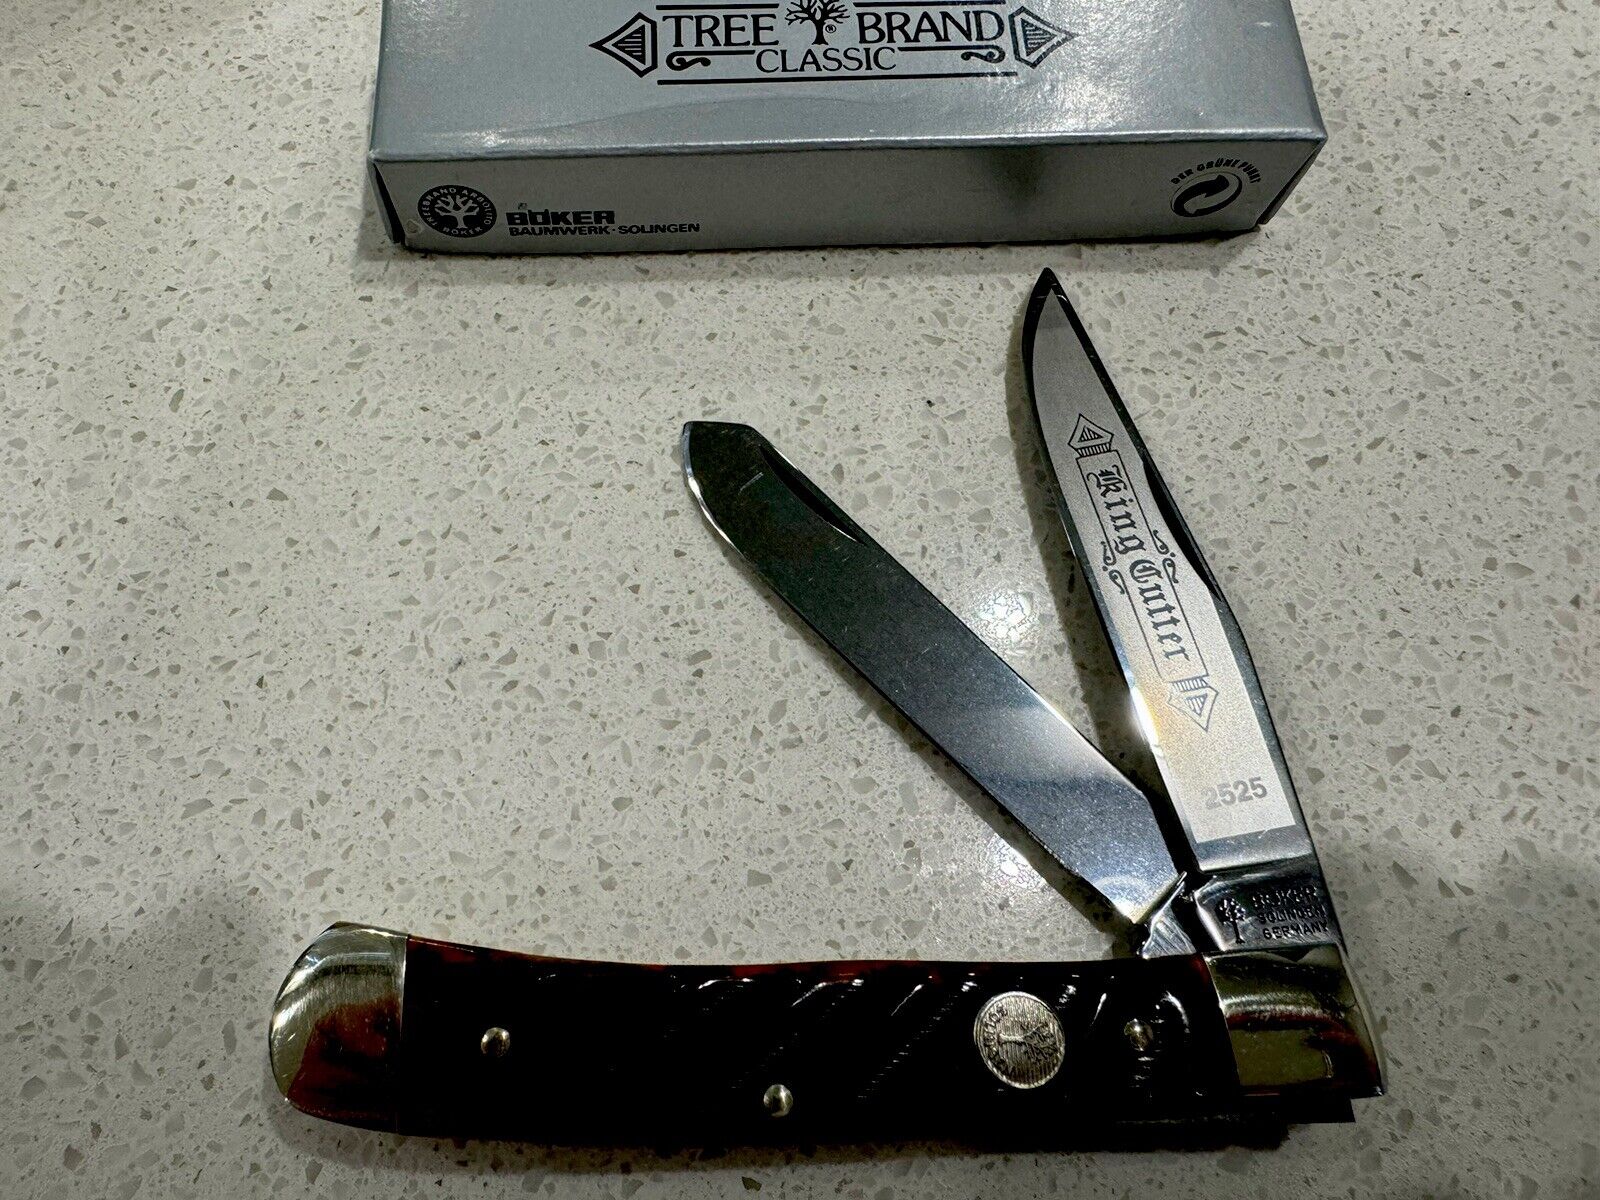 Boker Tree Brand Classic Knife Model 2525 WBB Trapper. New In Box. German Made